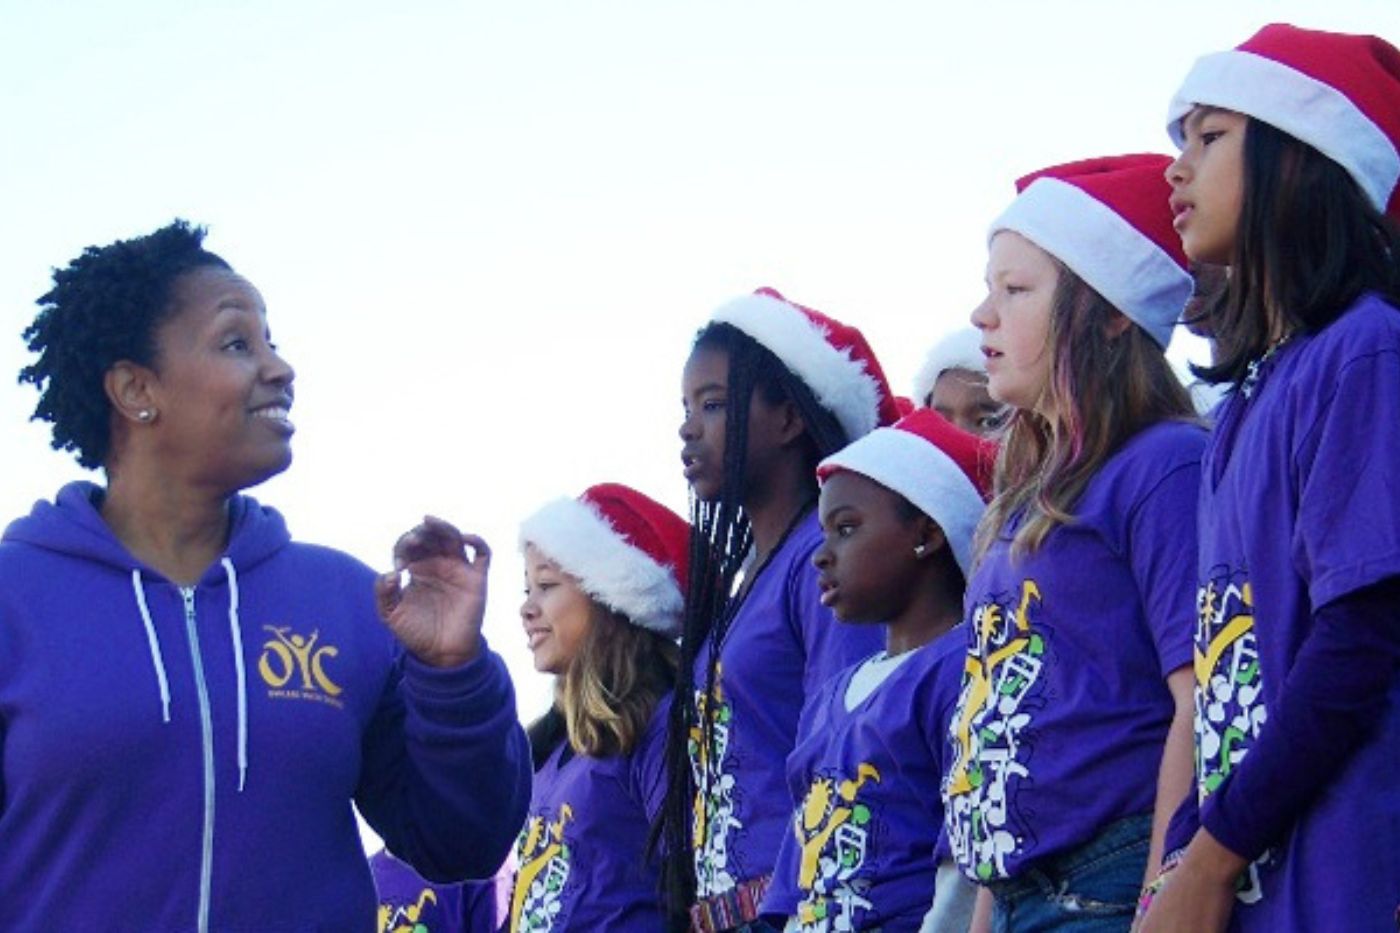 Oakland Youth singing in santa hats and purple shirts